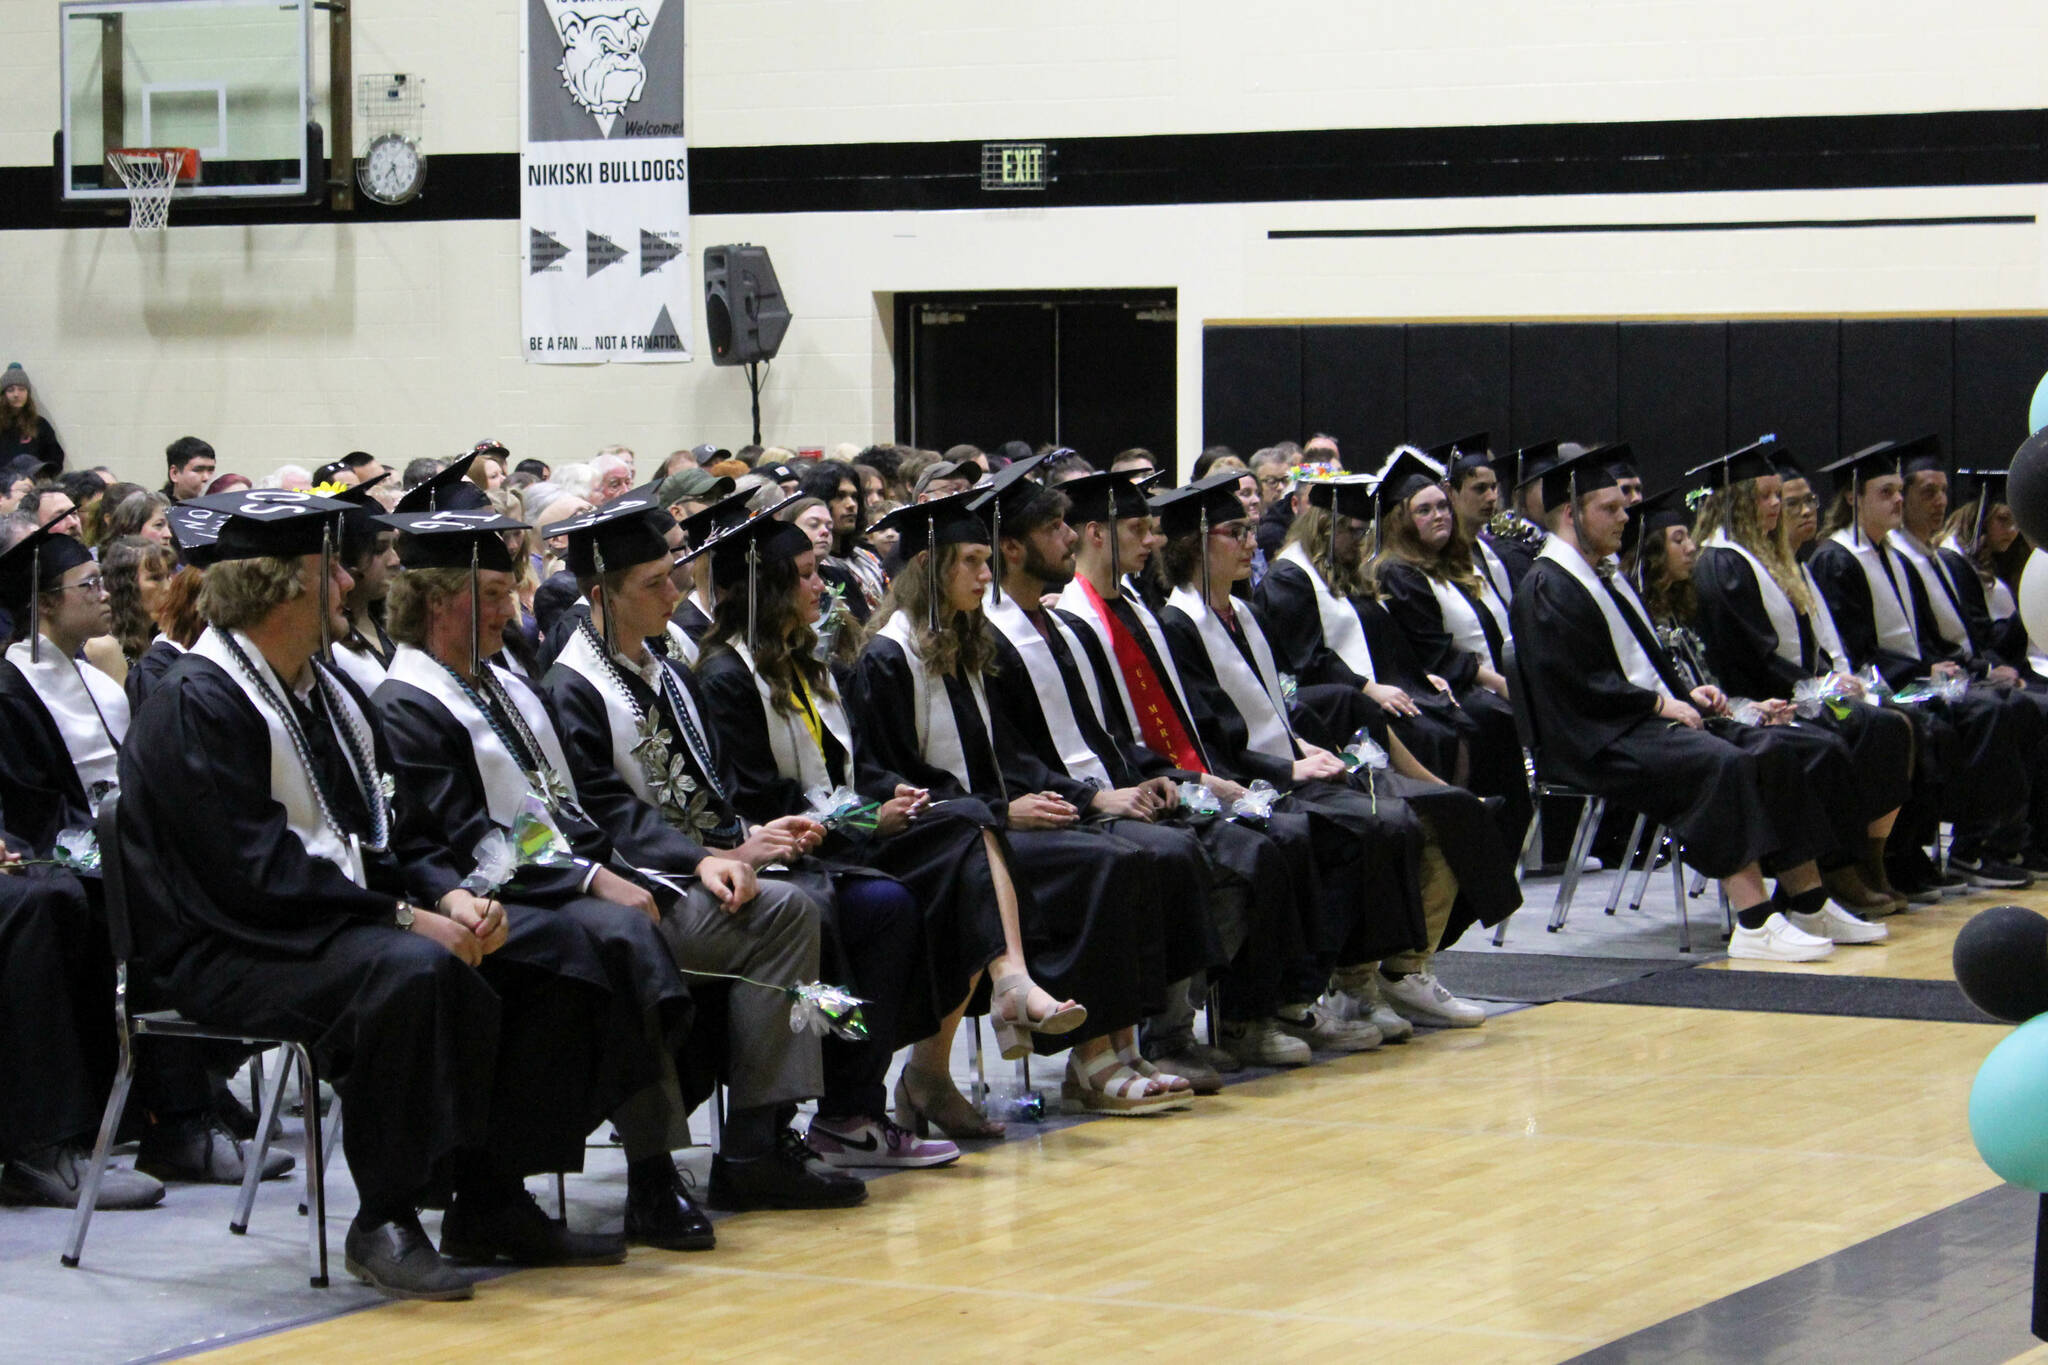 Nikiski Middle/High School graduates wait to receive diplomas at a ceremony on Tuesday, May 16, 2023 in Nikiski, Alaska. (Ashlyn O’Hara/Peninsula Clarion)